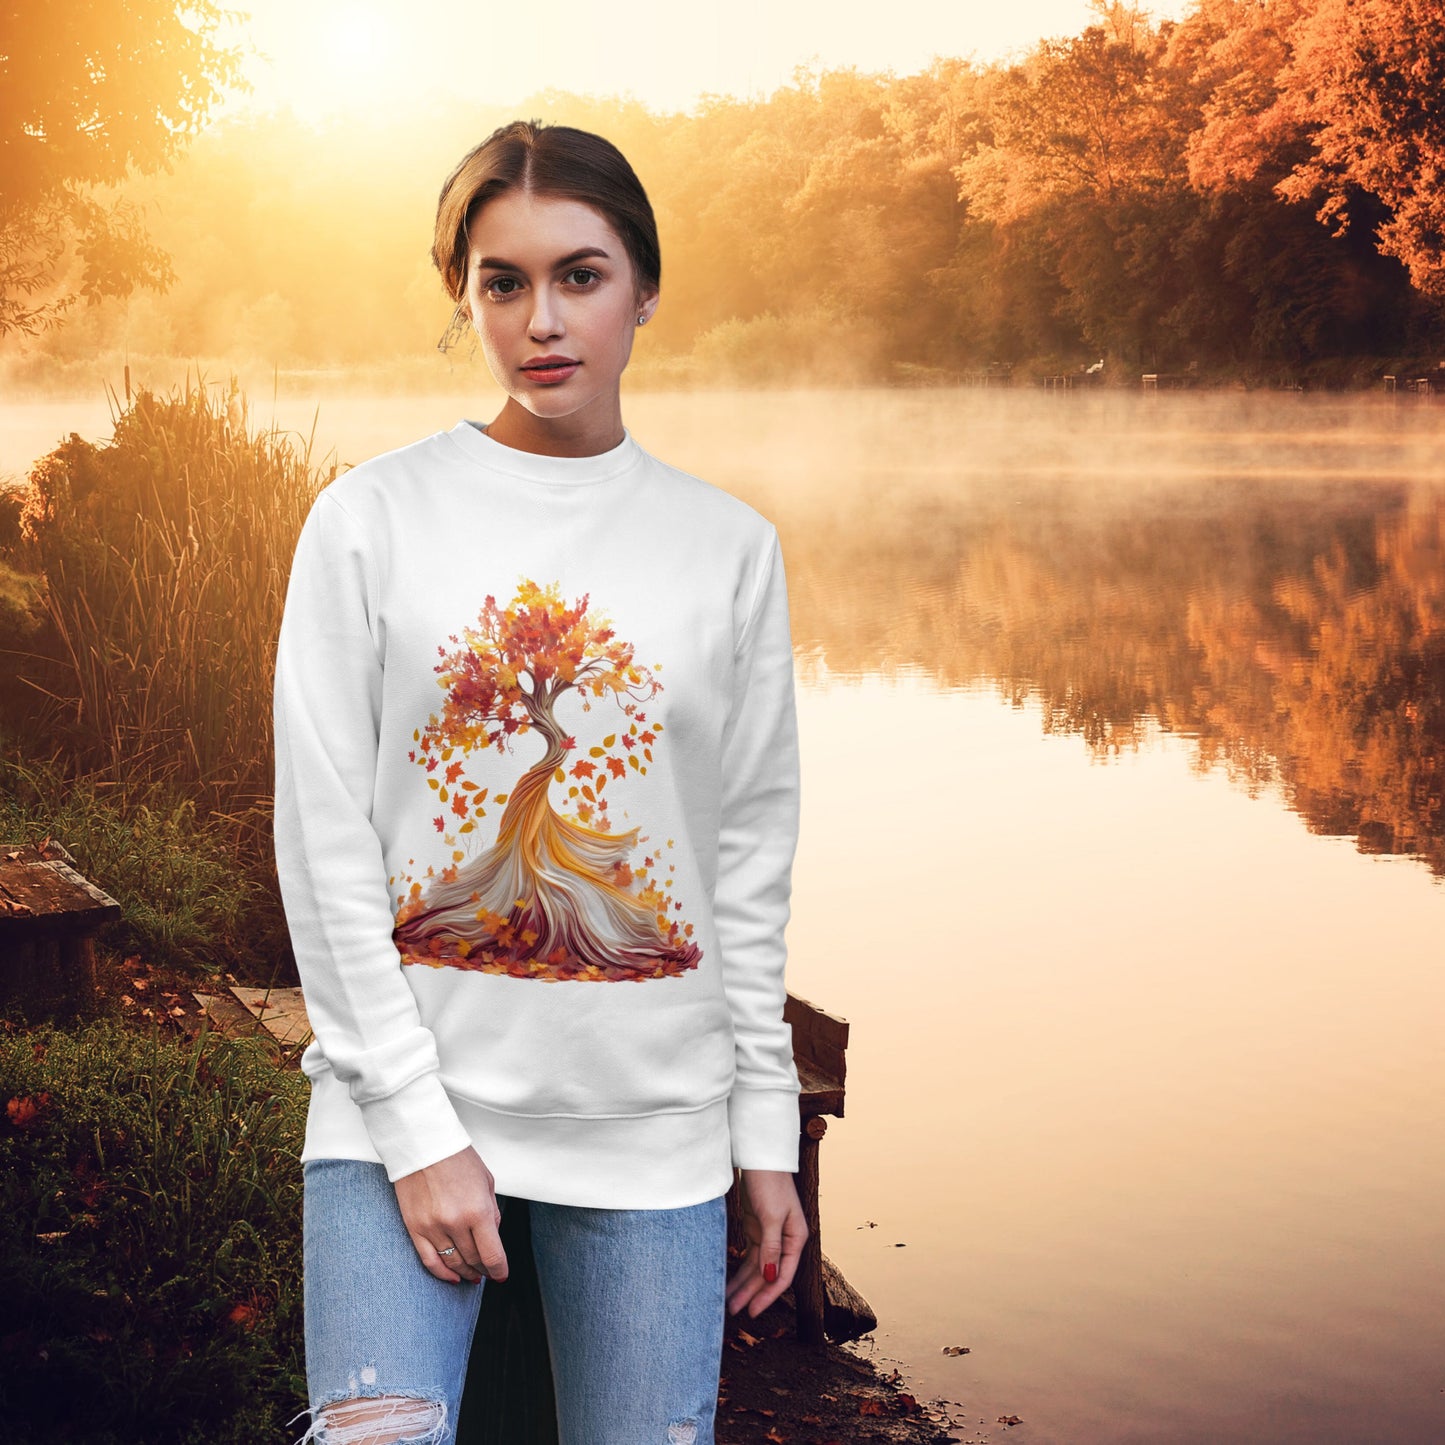 Majestic Autumn Tree Sweatshirt - Unique Design with Abstraction, Stylish Fall-themed Apparel, Cottaragore Fall Fashion Sweatshirt   